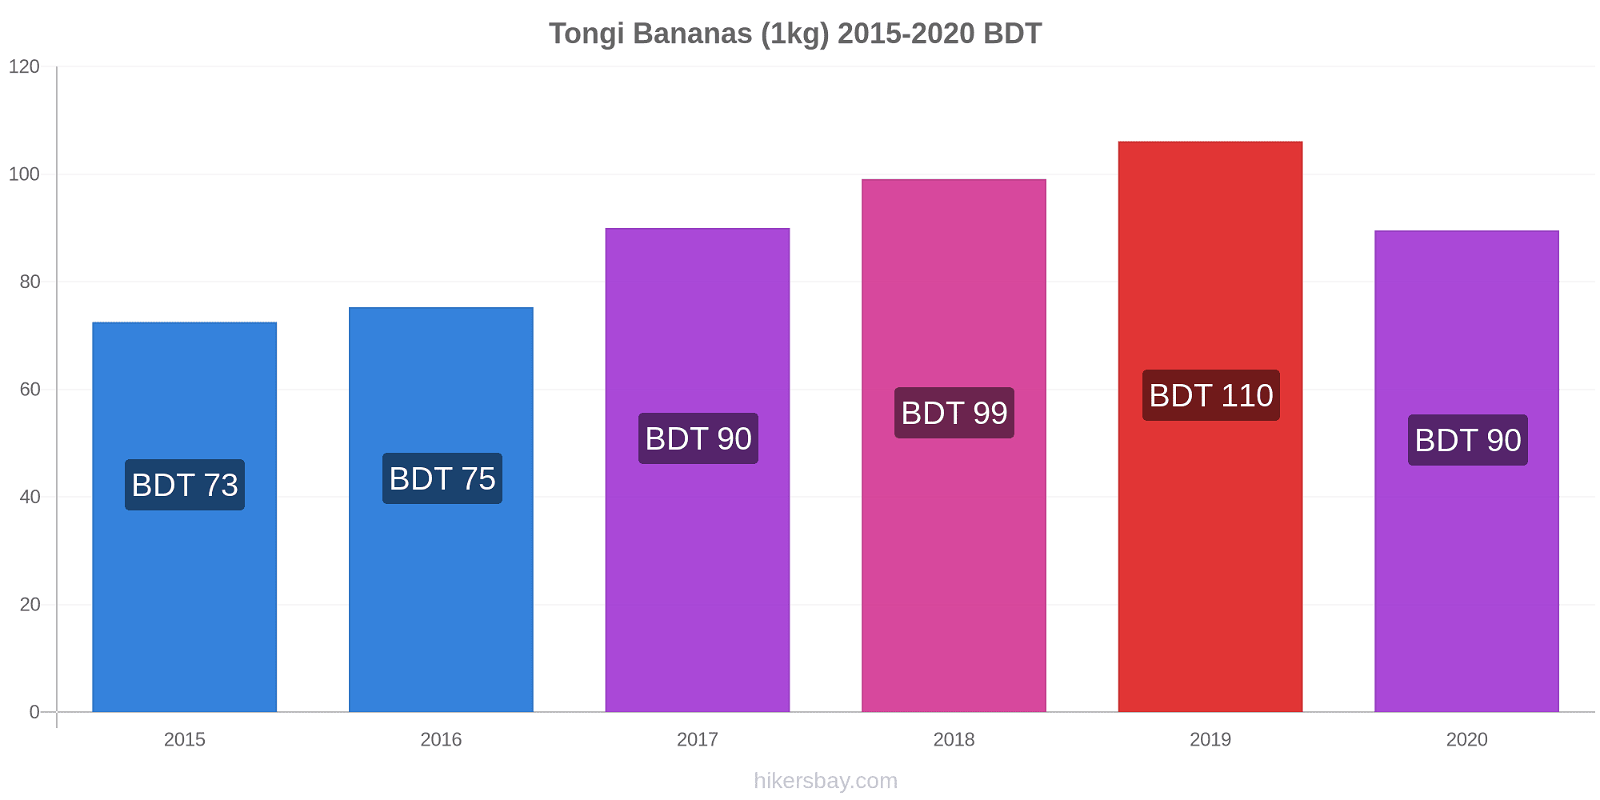 Tongi price changes Bananas (1kg) hikersbay.com